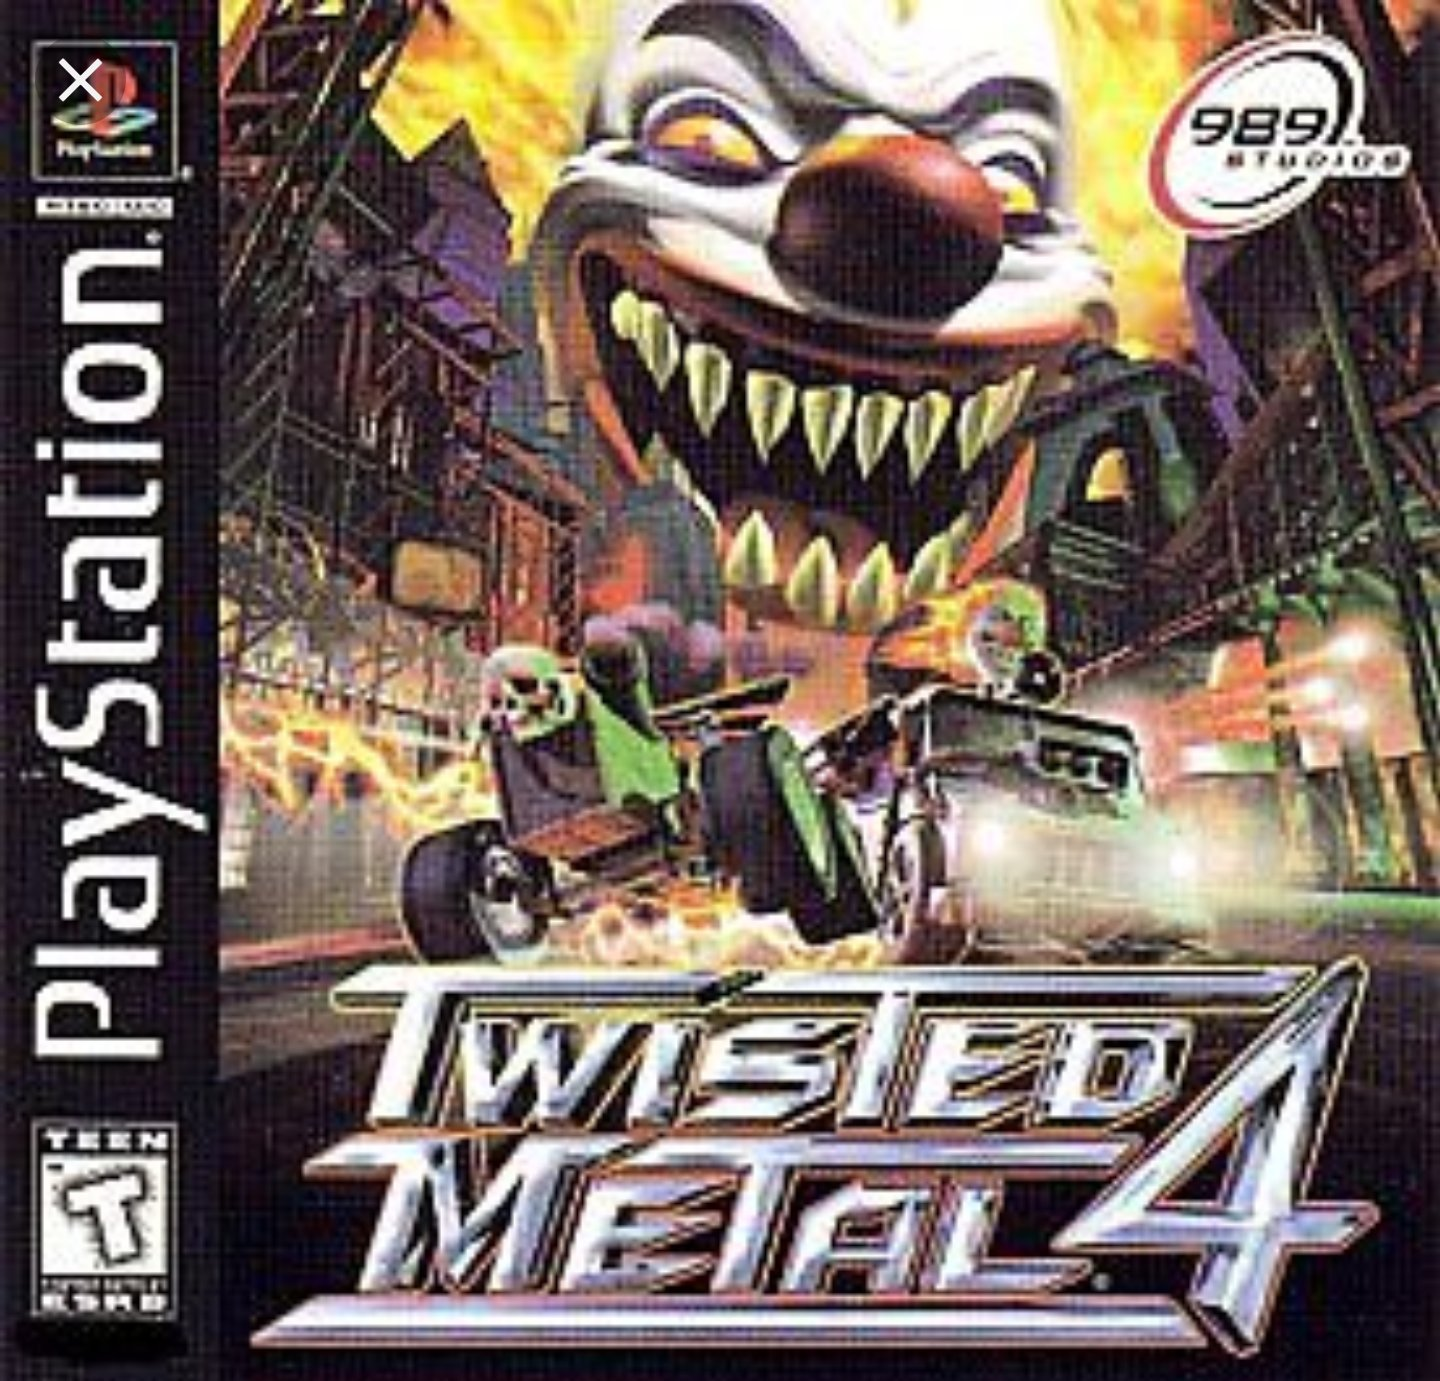 Do You Remember Twisted Metal 4? #twistedmetal4 #twistedmetal #sony #p